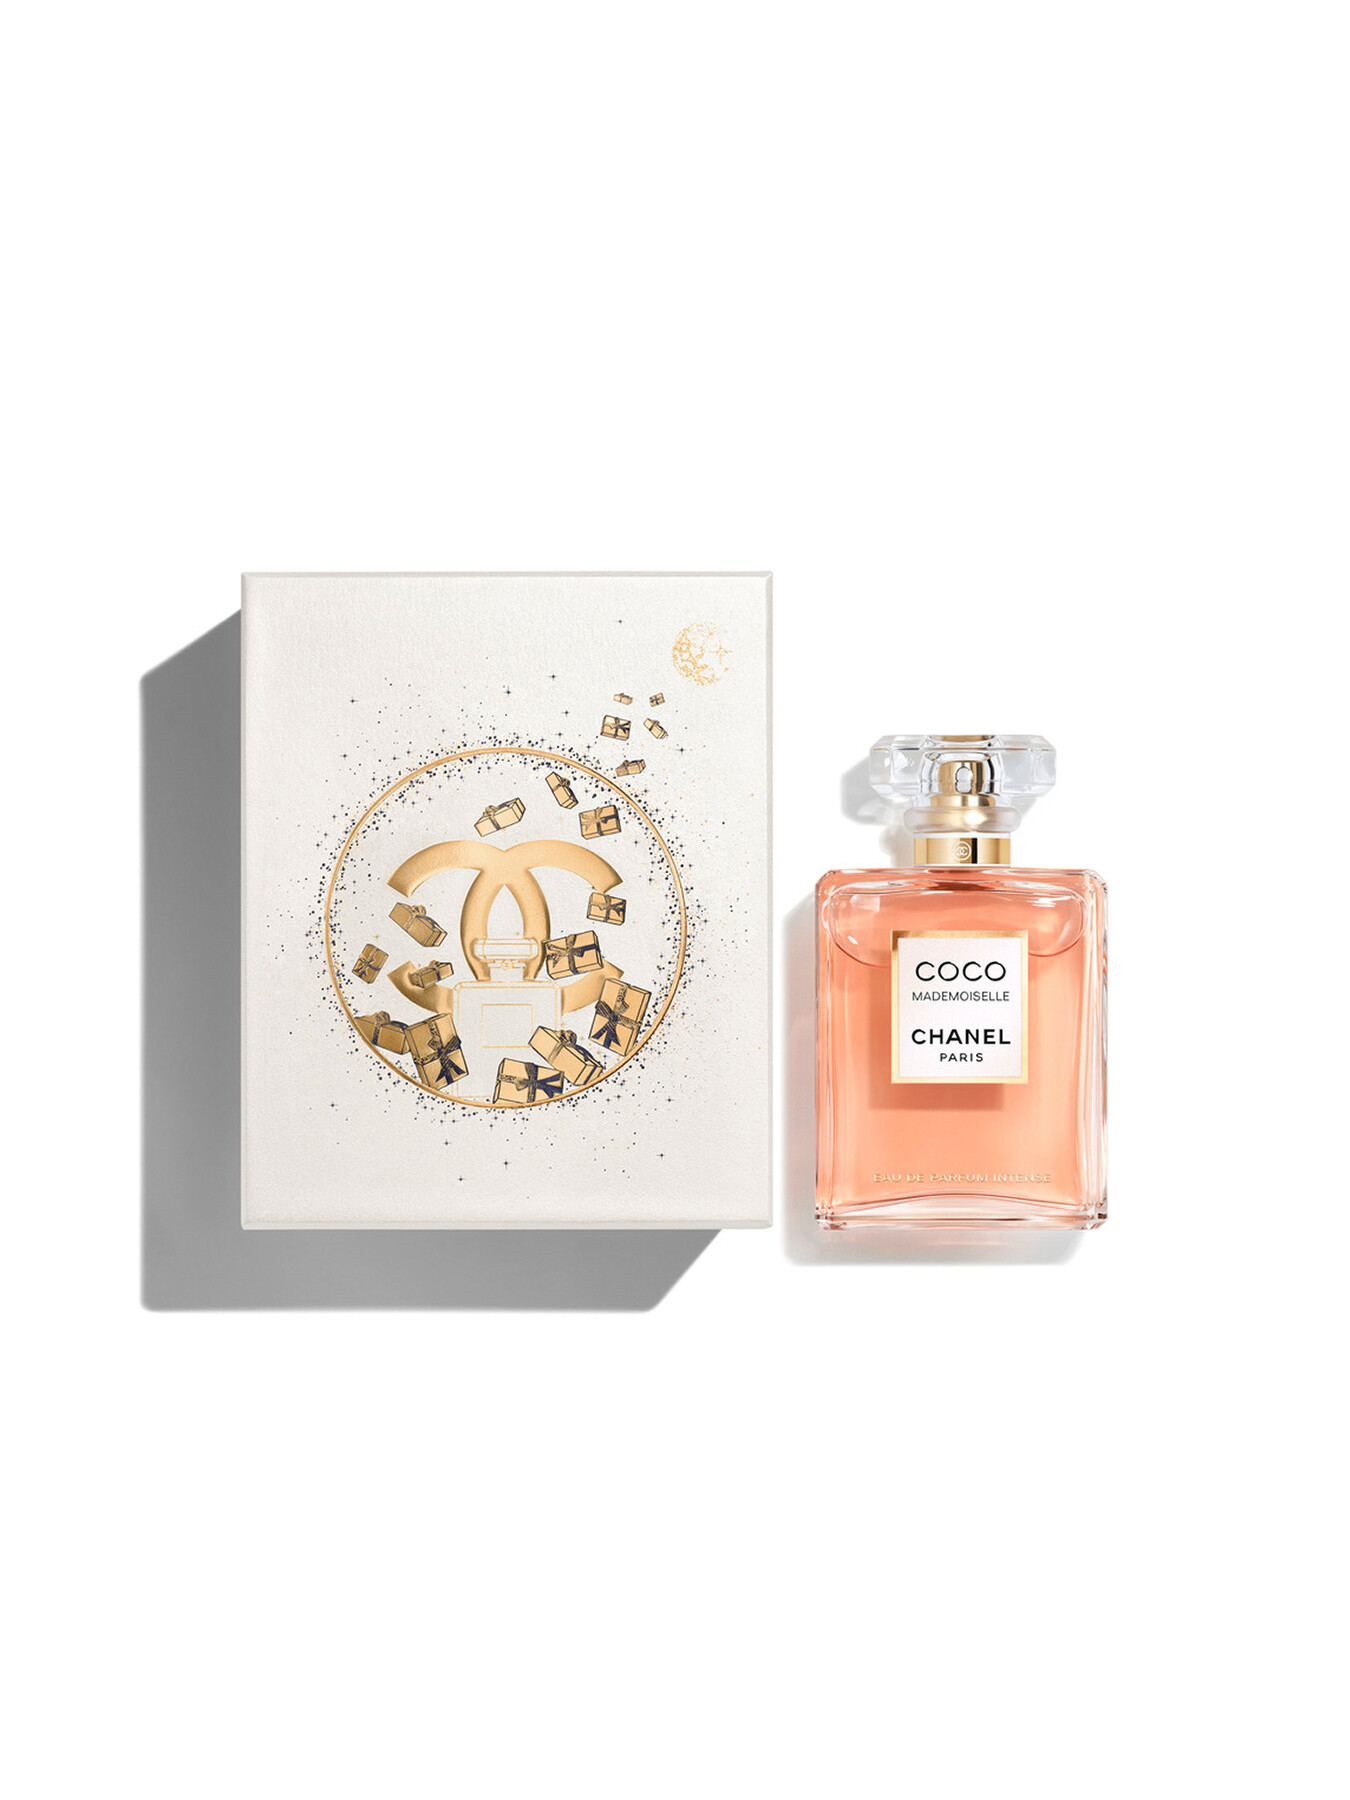 Chanel Coco Mademoiselle Eau De Parfum Intense 100ml With Gift Box